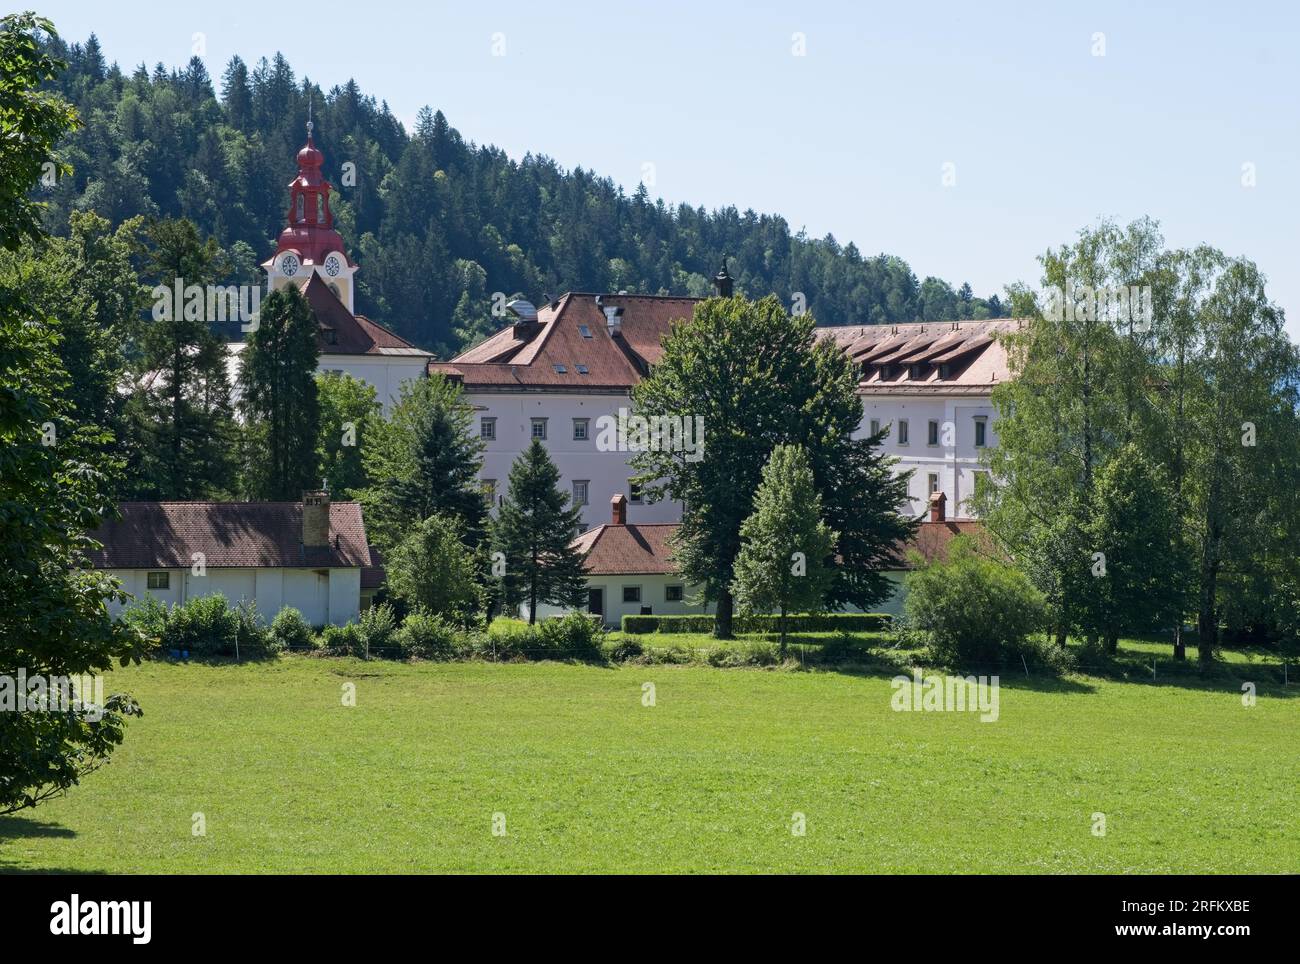 Begunje na Gorenjskem, Slovenia - Jul 29, 2023: During World War II, Kacenstajn Castle was used as a Gestapo prison. More than 11,500 people were impr Stock Photo